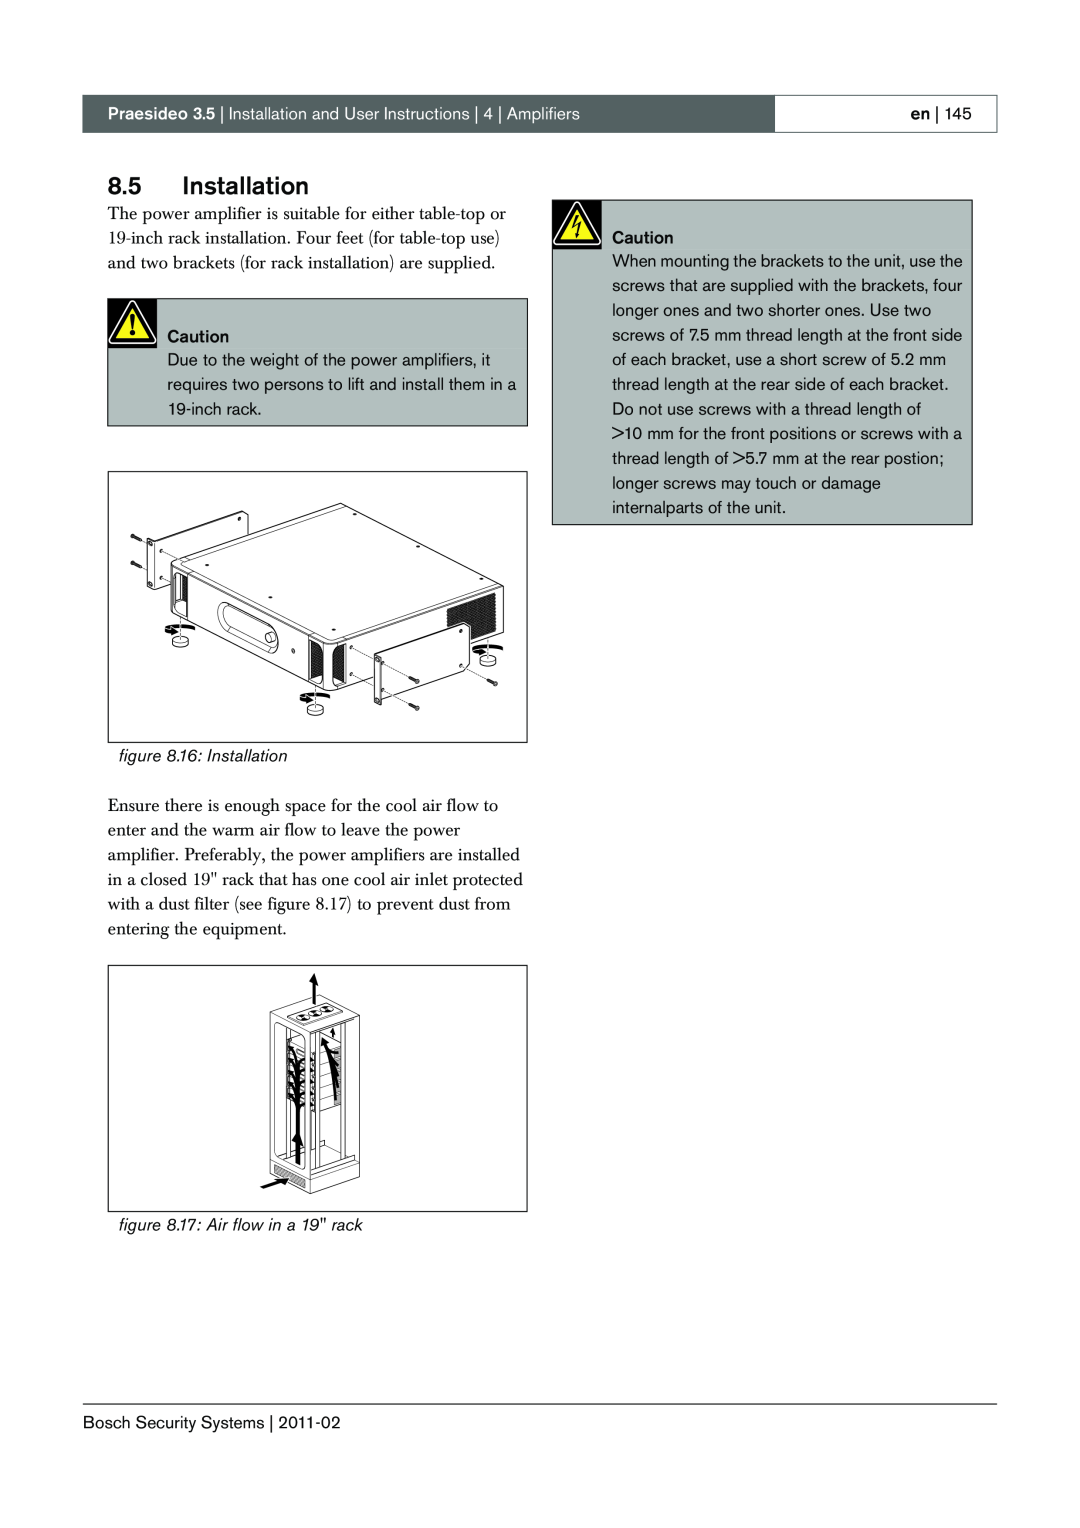 Bosch Appliances 3.5 manual 8.5Installation, 16 Installation, 17: Air flow in a 19 rack, en, Bosch Security Systems 